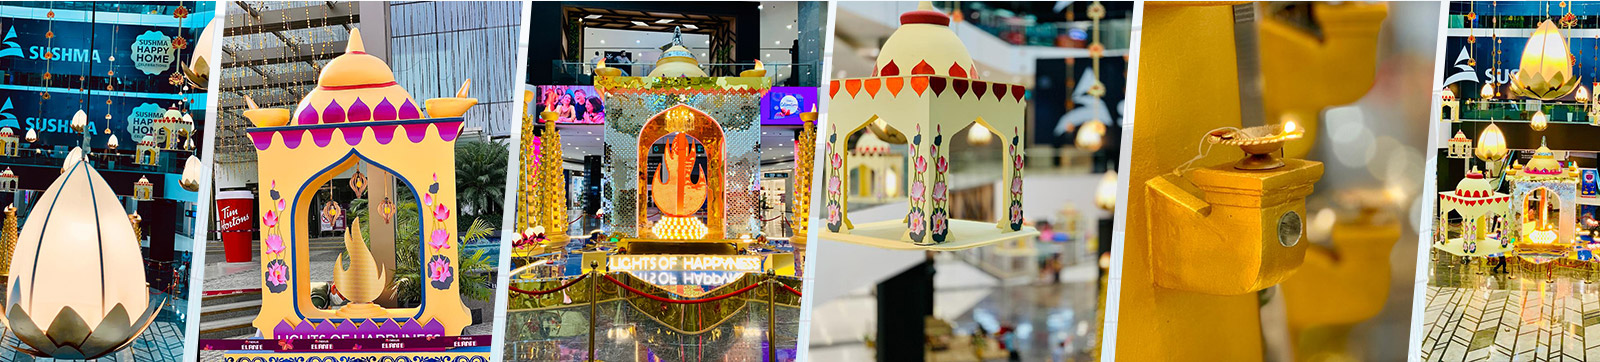 Elante Mall decked up for Diwali